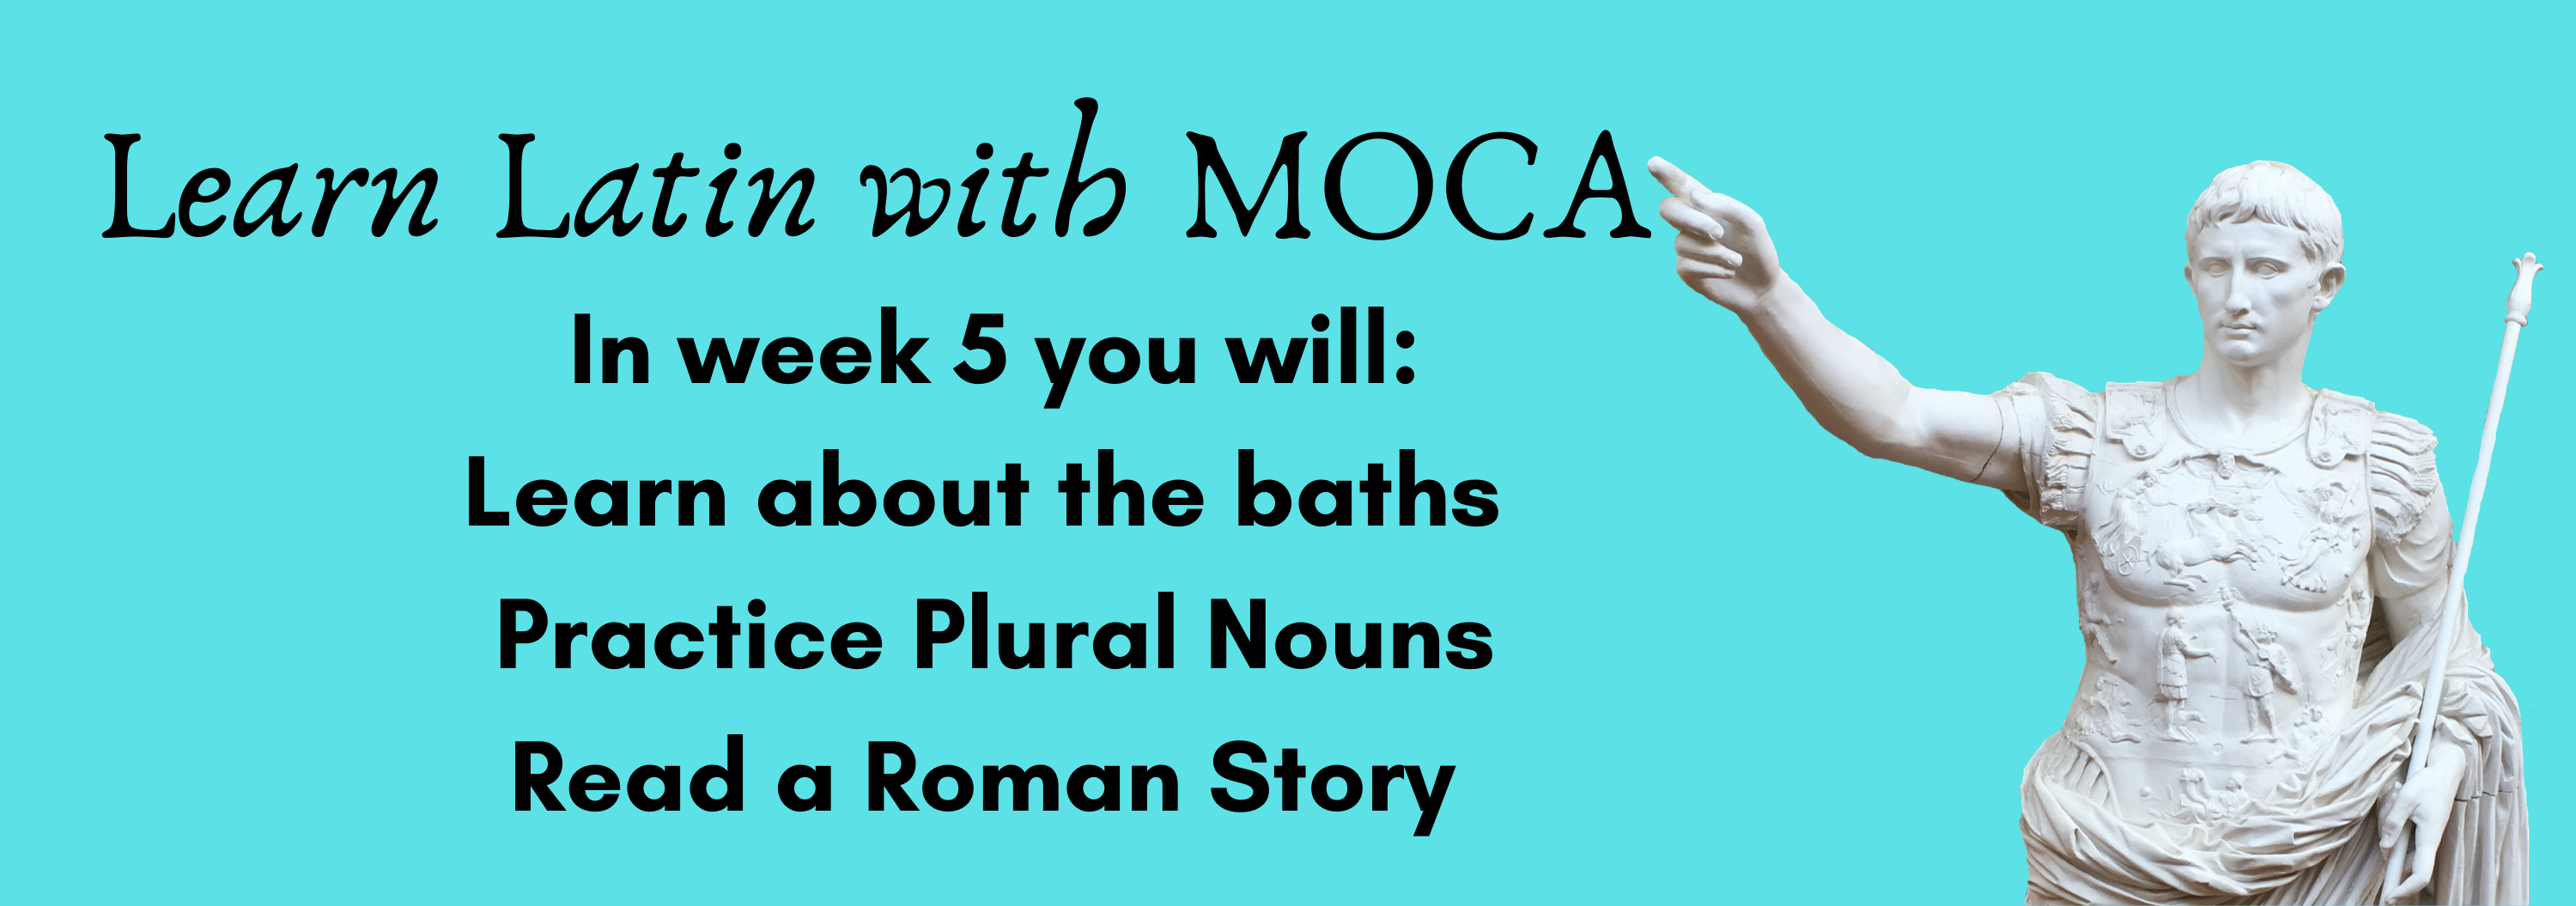  Week 5 Learn Latin with Moca